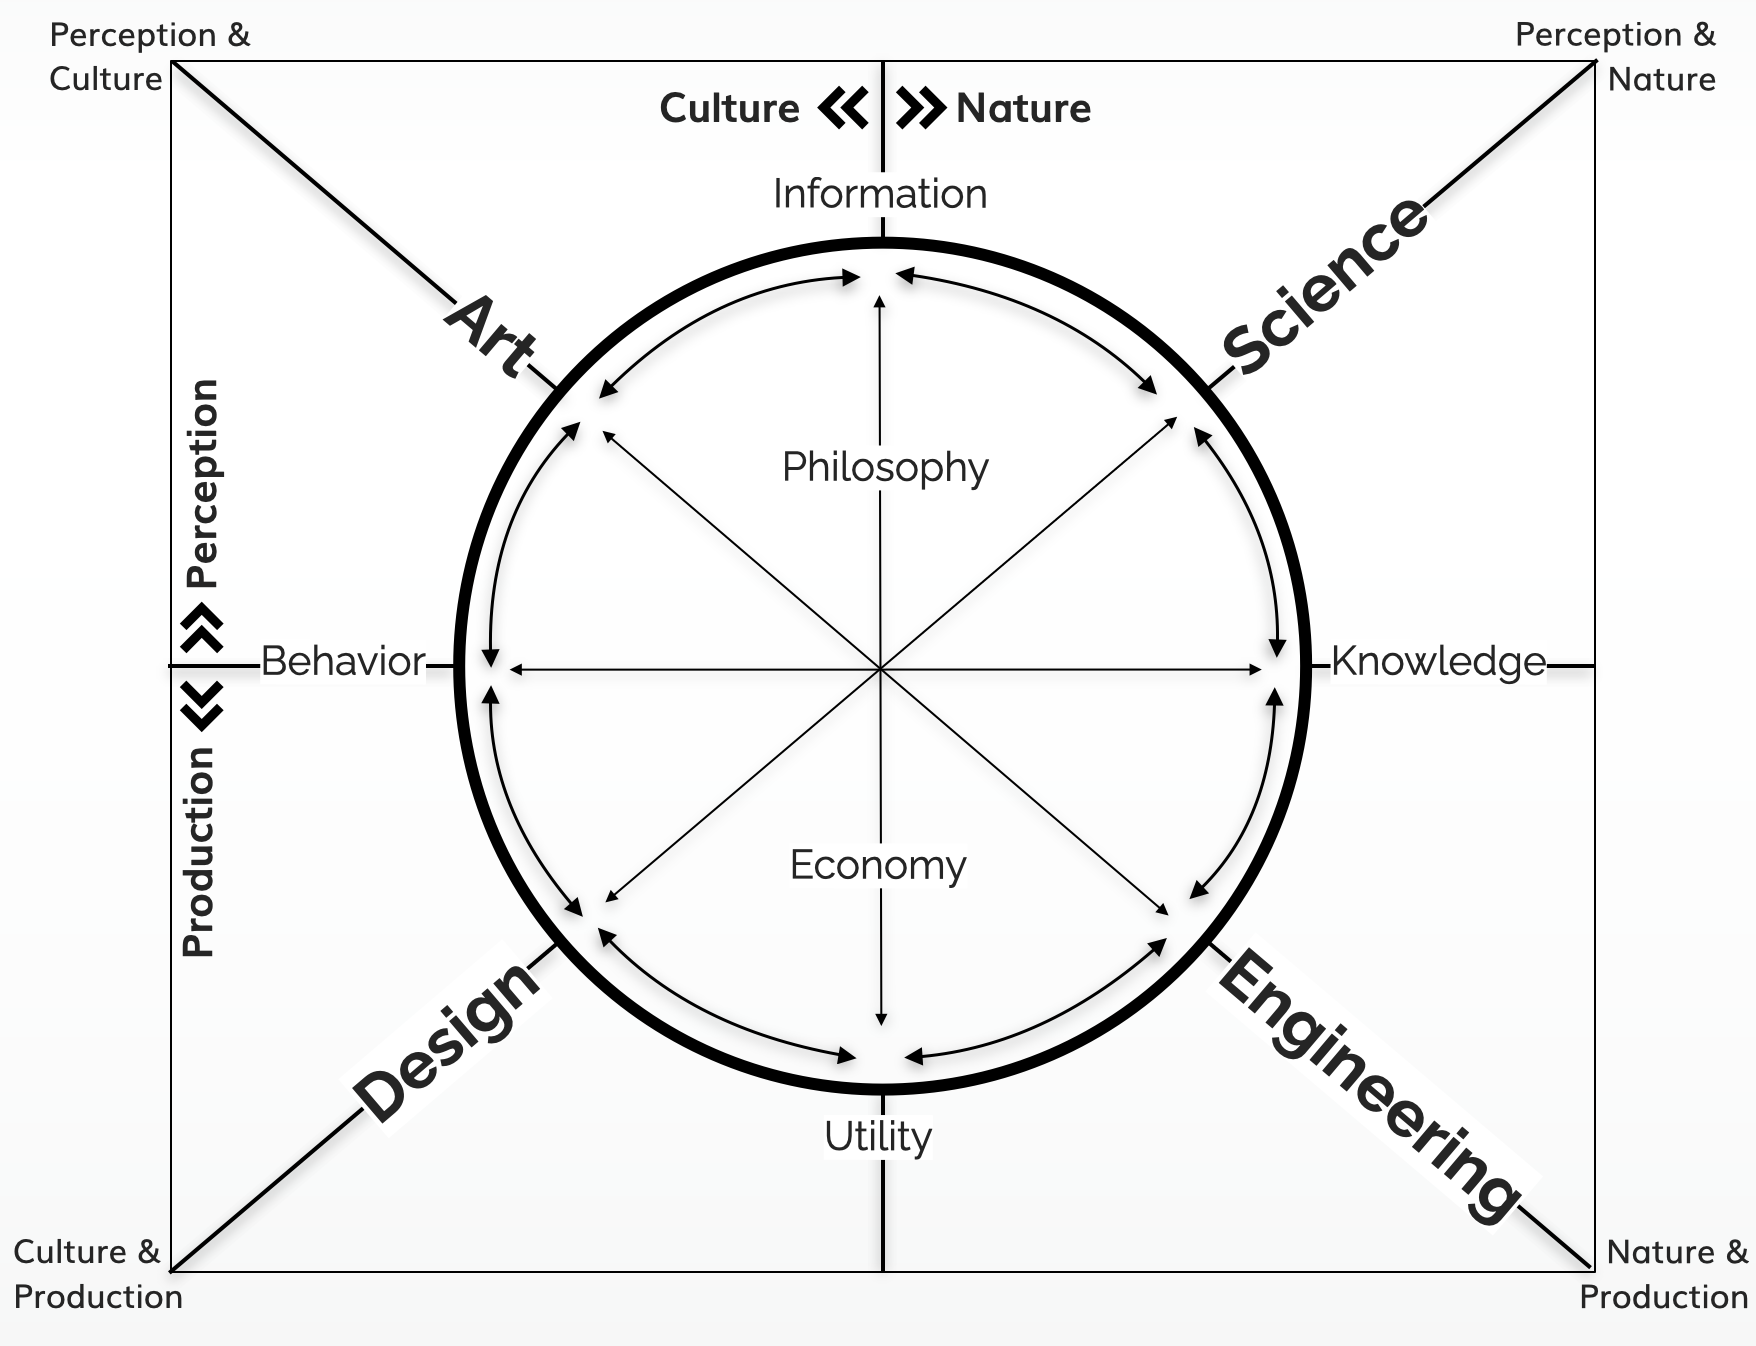 Krebs Cycle of Creativity (KCC)